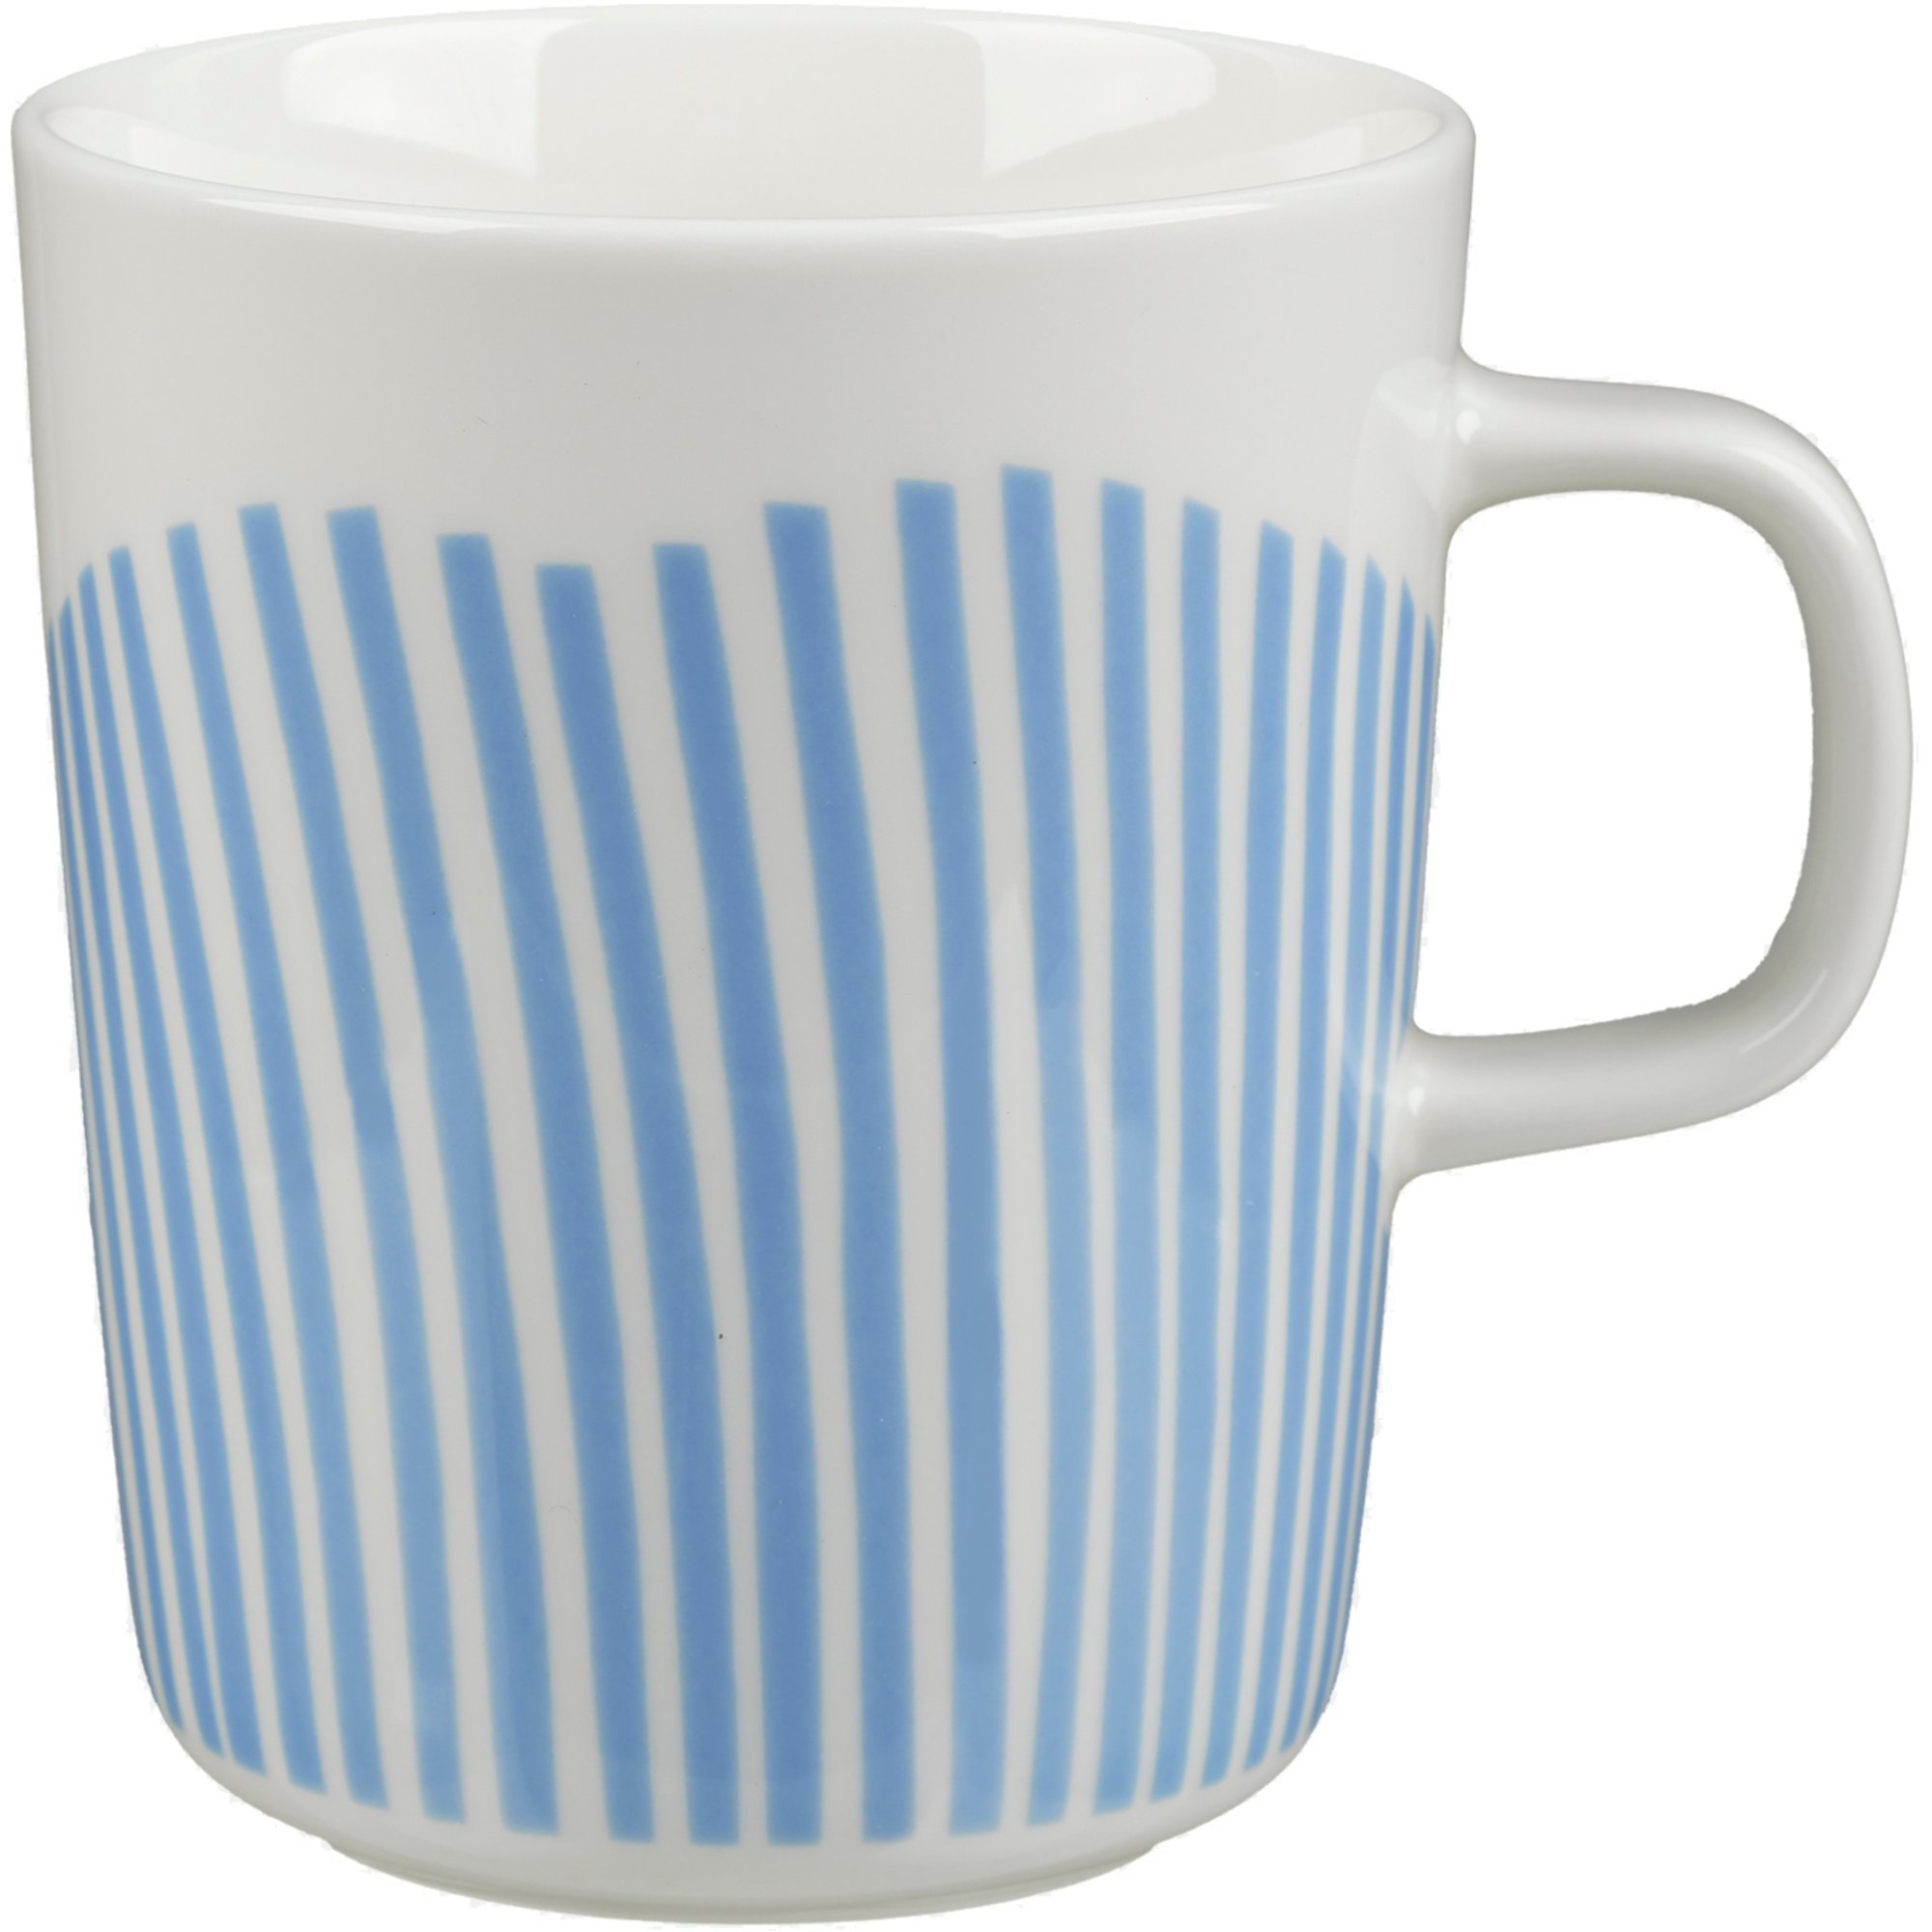 Marimekko Uimari mugg, 2,5 dl, vit/ljusblå